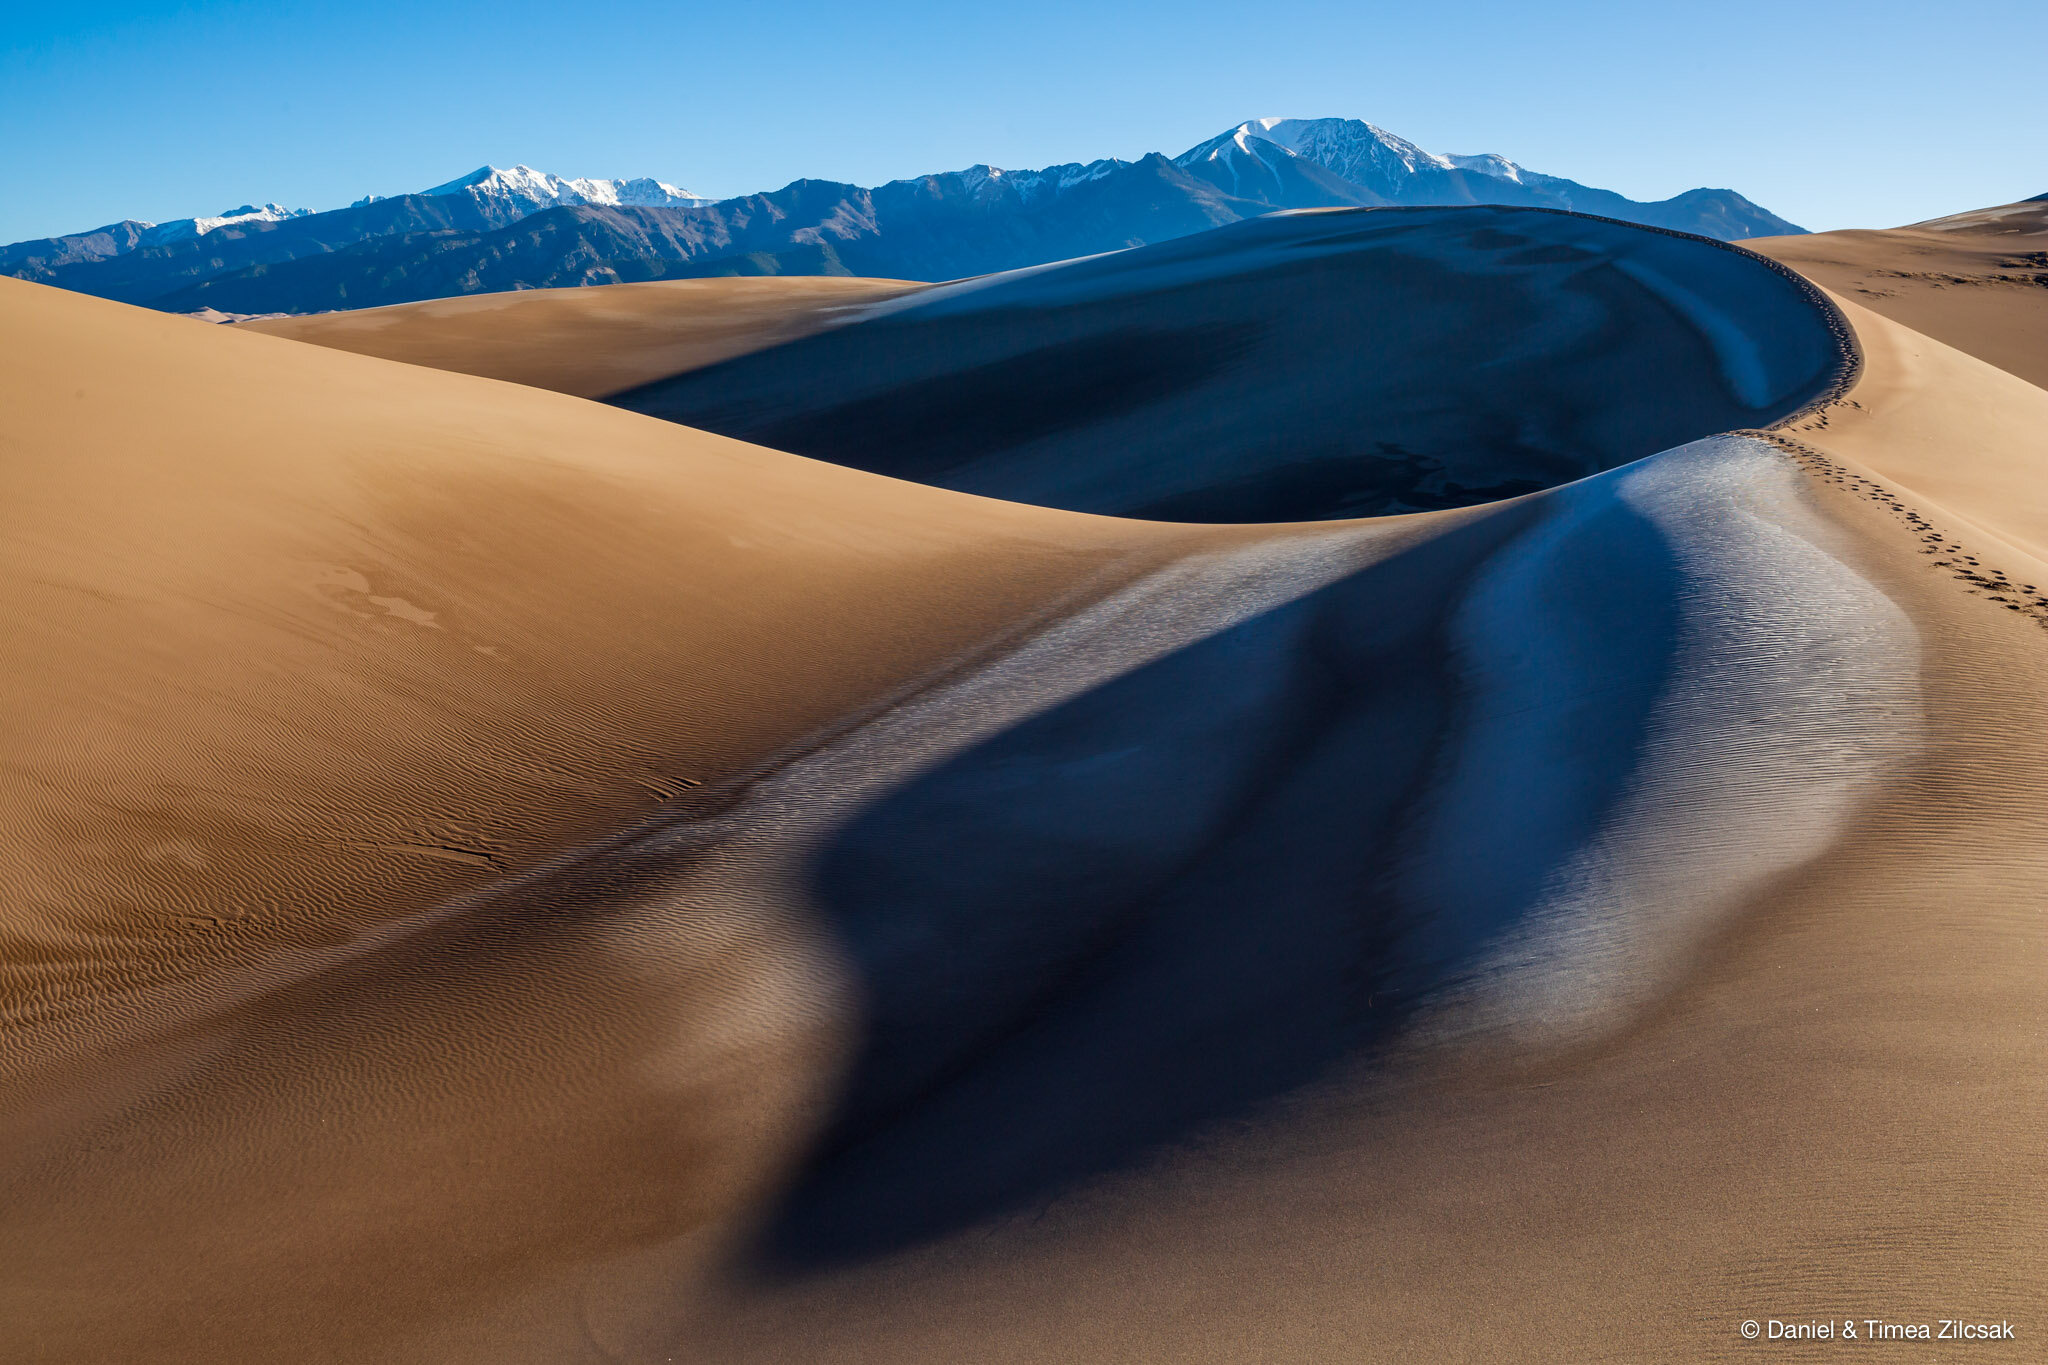 Great-Sand-Dunes-National-Park-9206.jpg